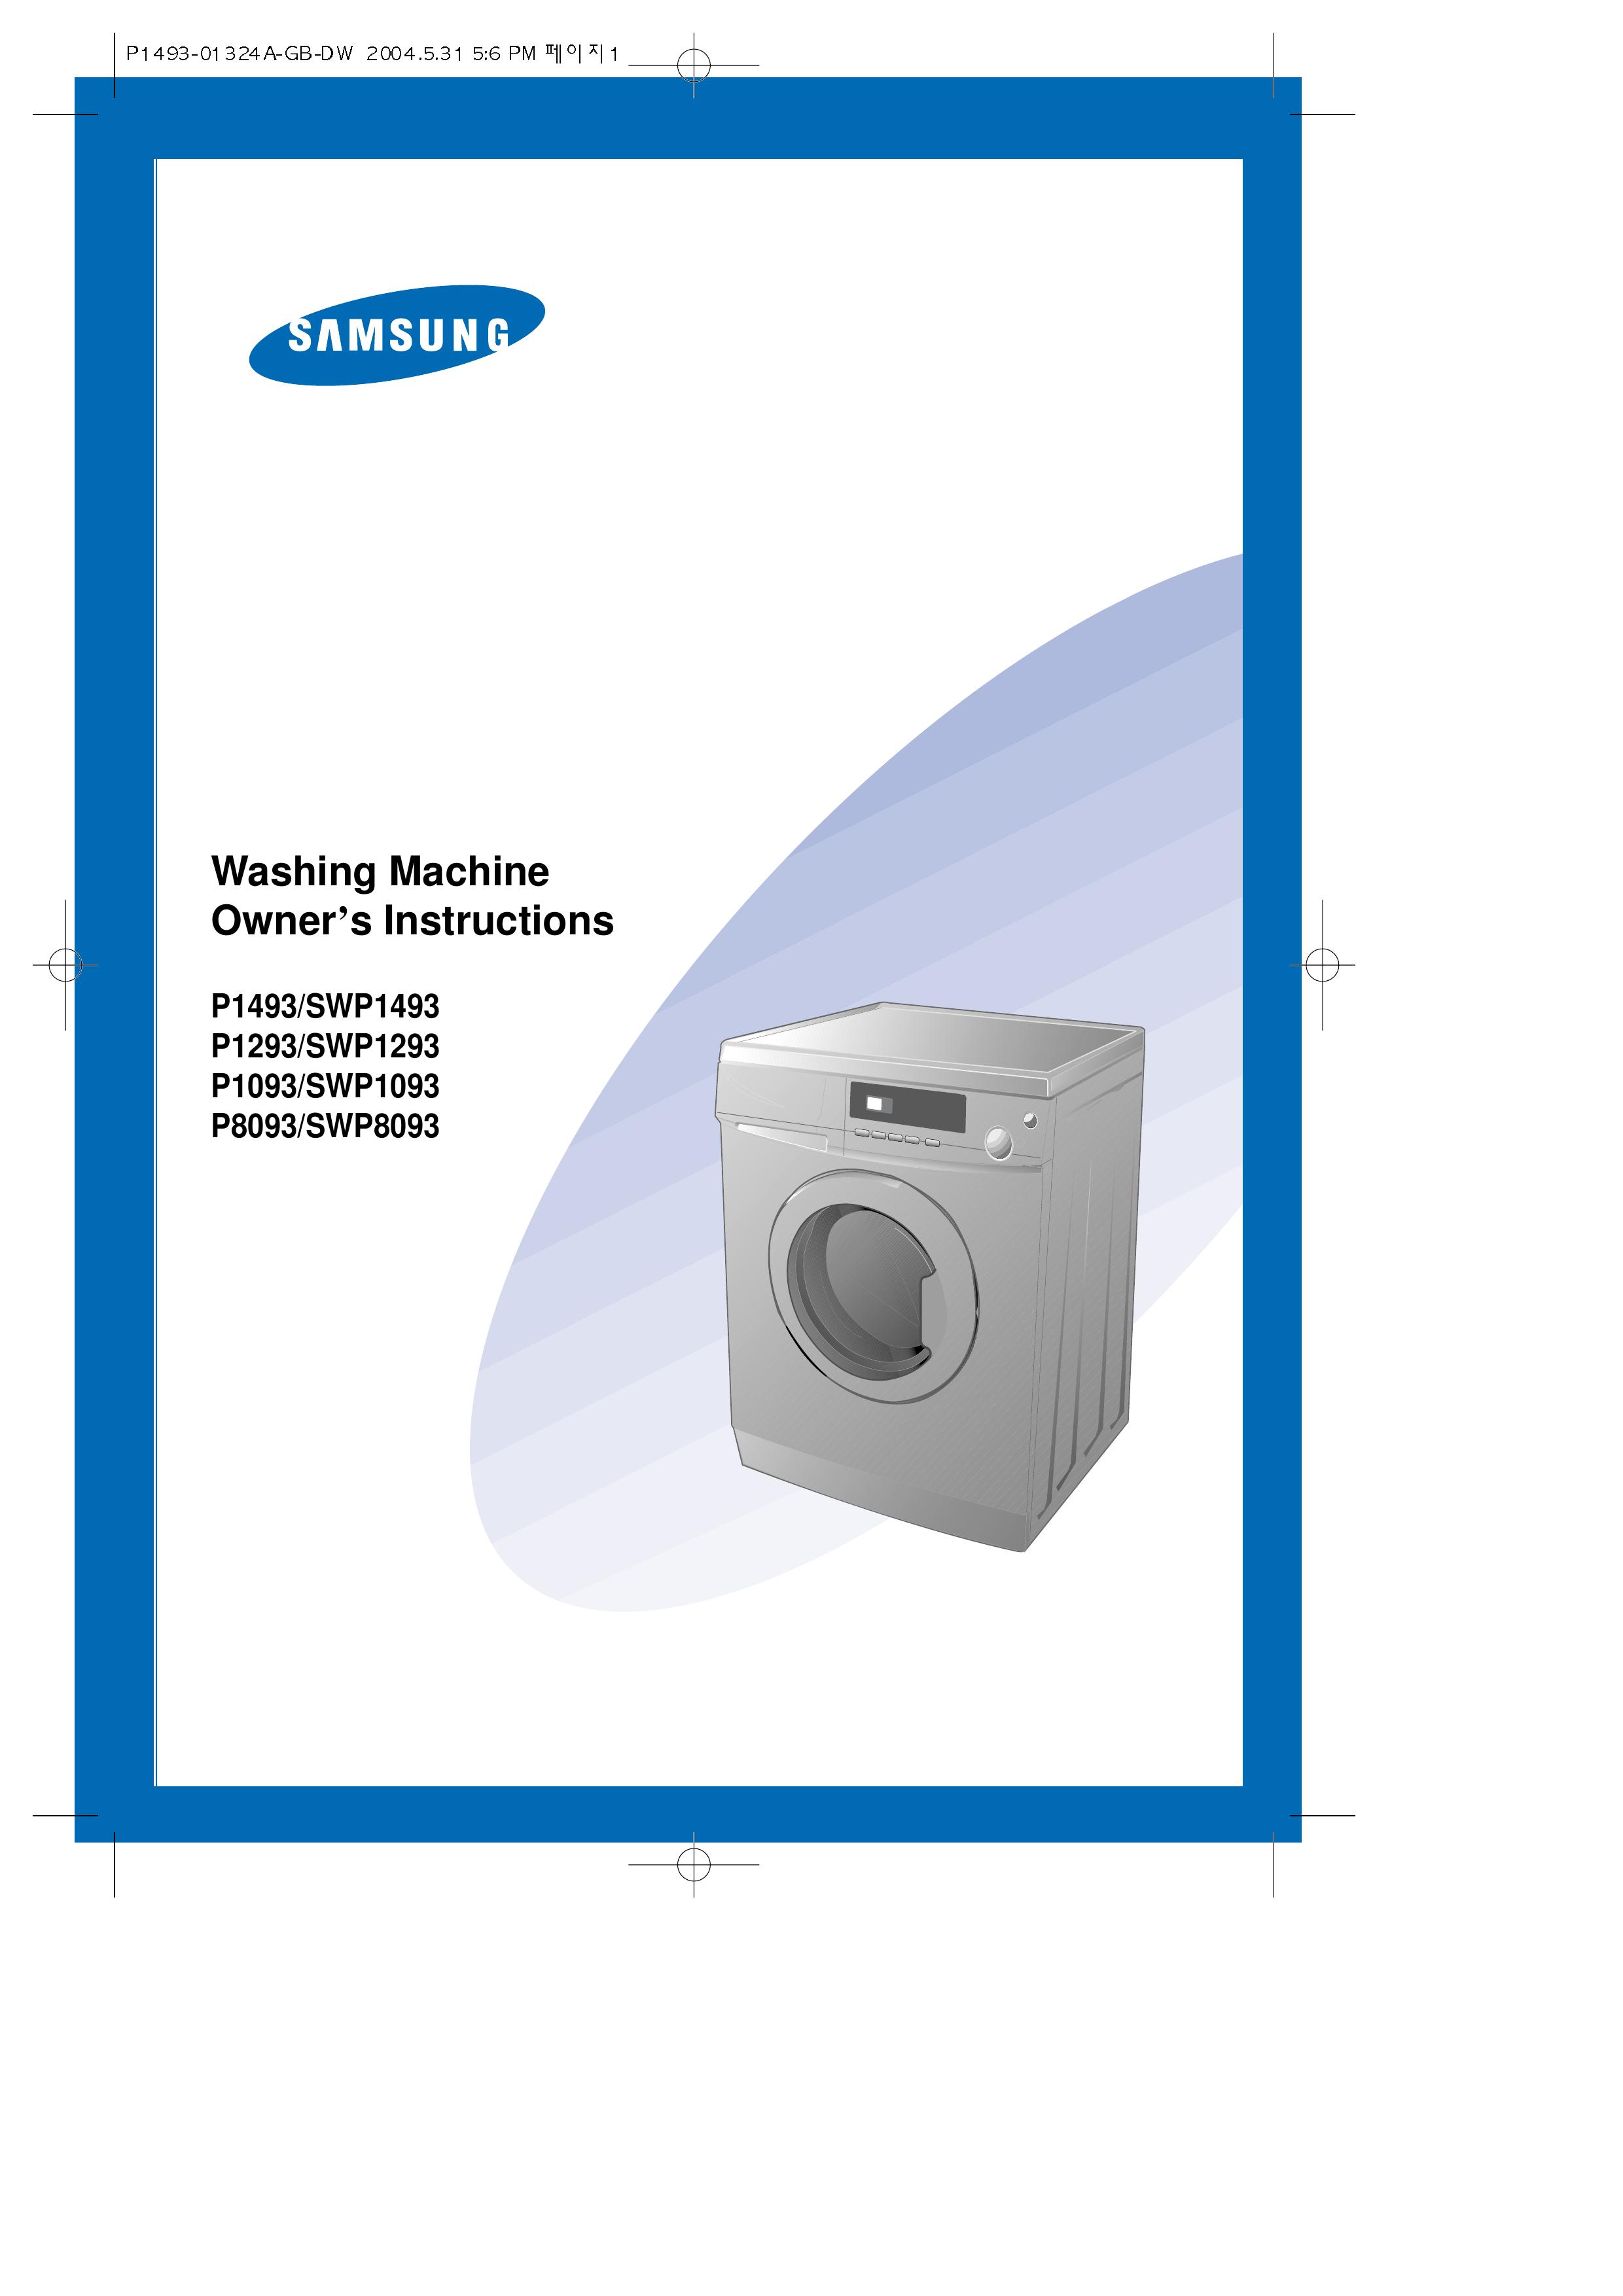 Samsung P1493 Washer/Dryer User Manual